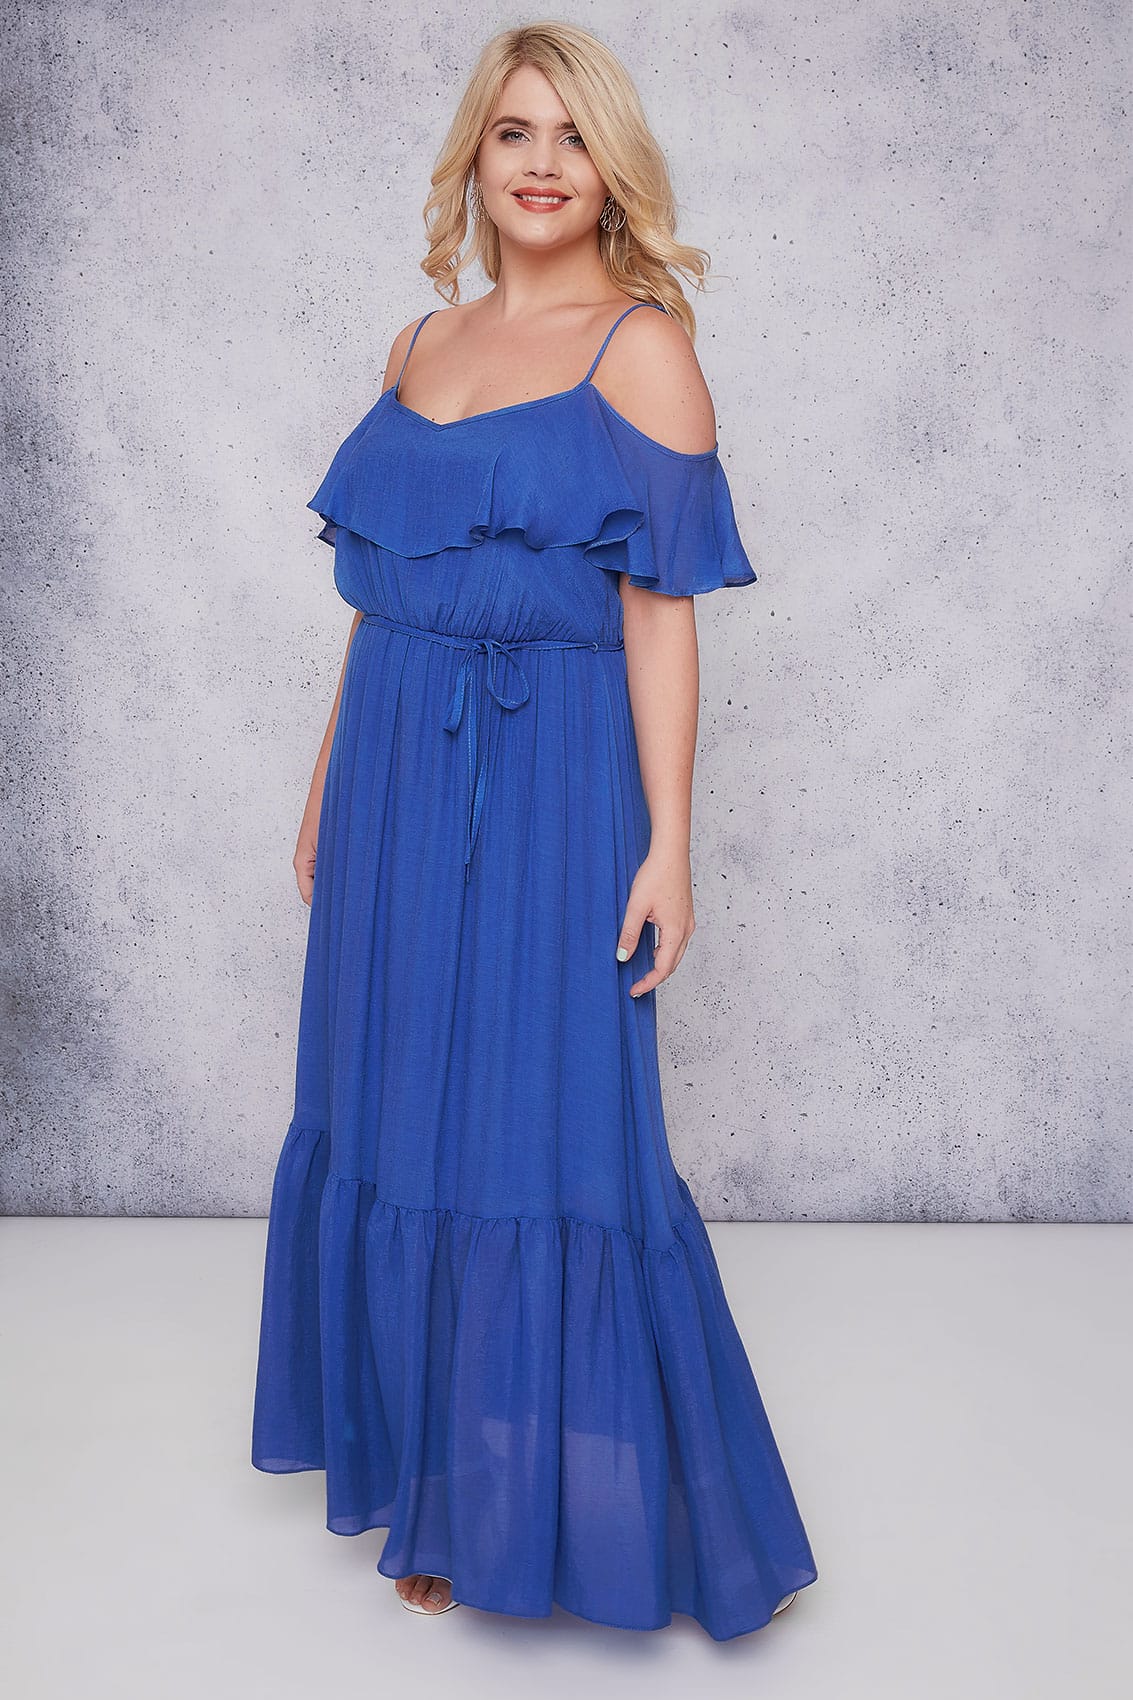 SCARLETT & JO Blue Cold Shoulder Frill Maxi Dress, Plus size 16 to 32